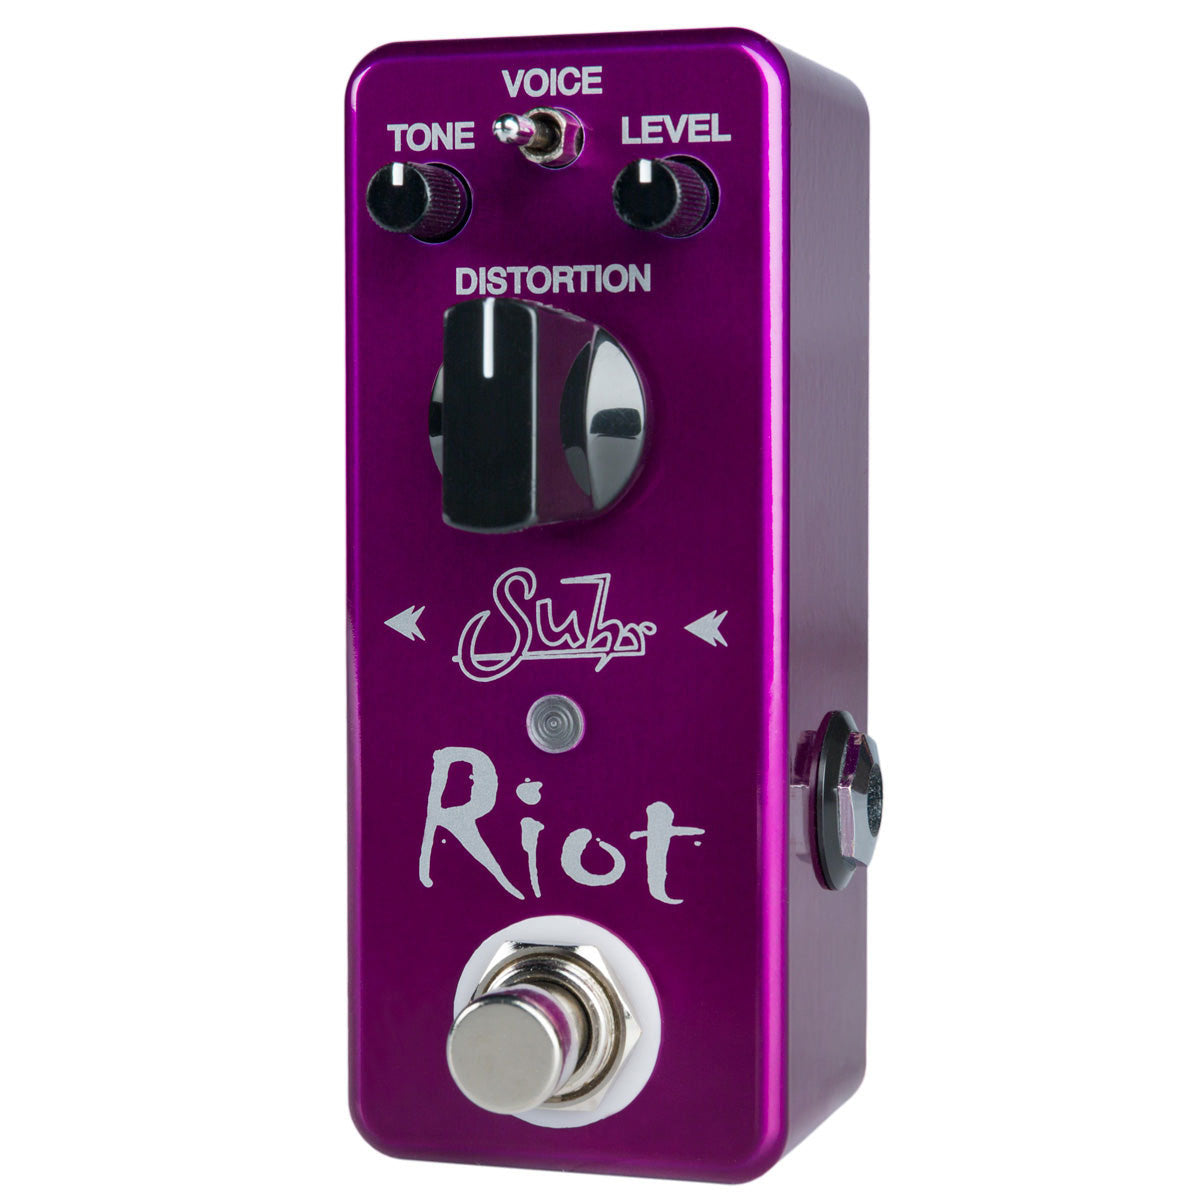 Suhr Riot Mini Distortion Pedal – RocketMusic